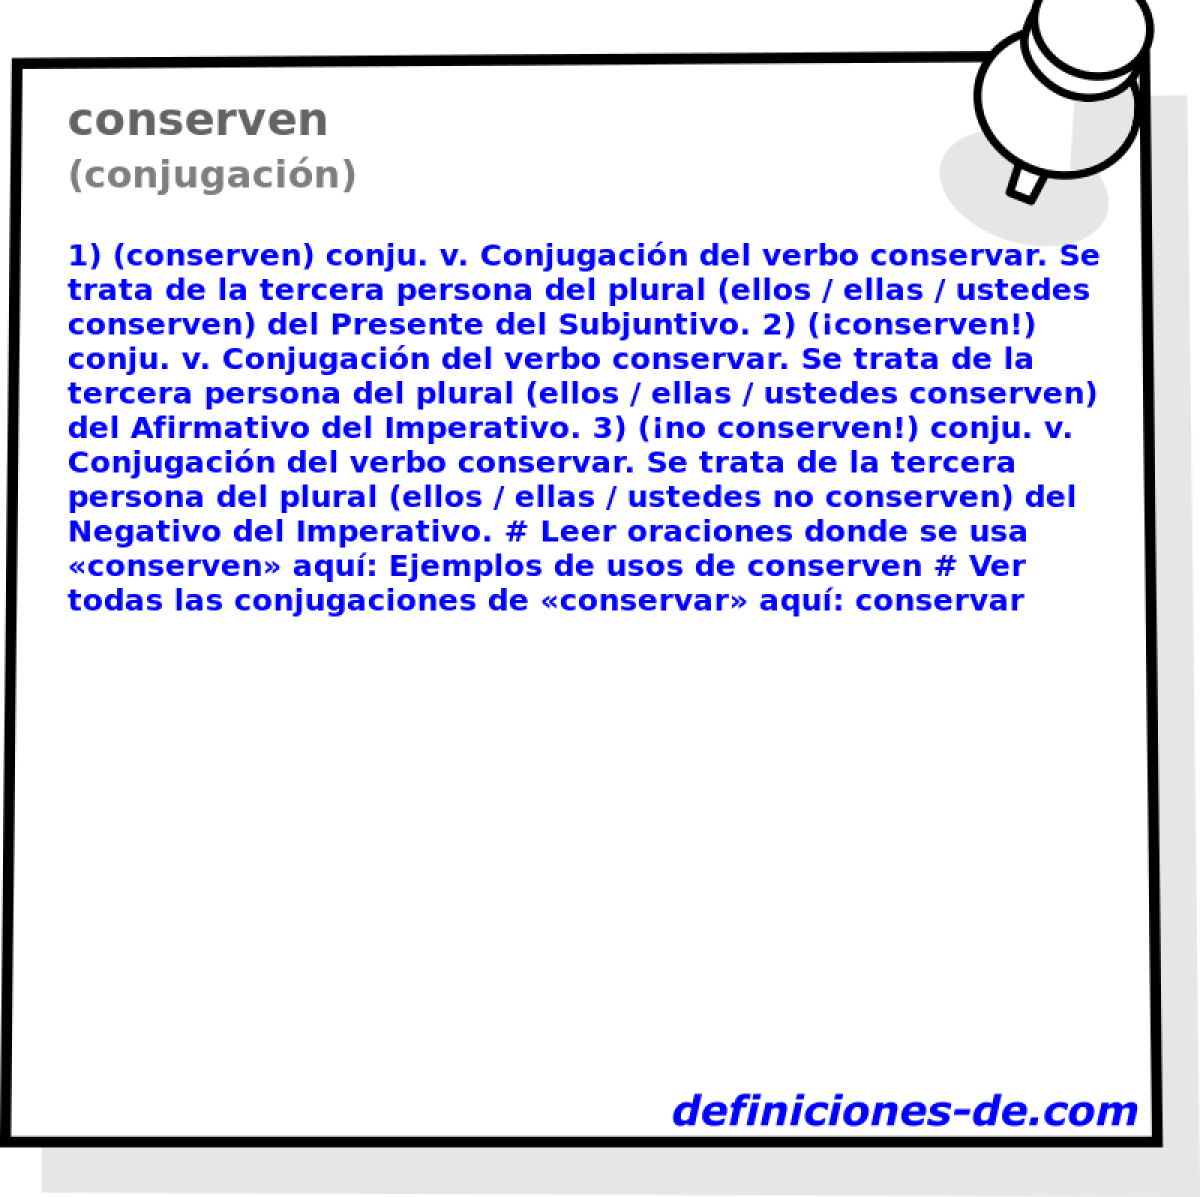 conserven (conjugacin)